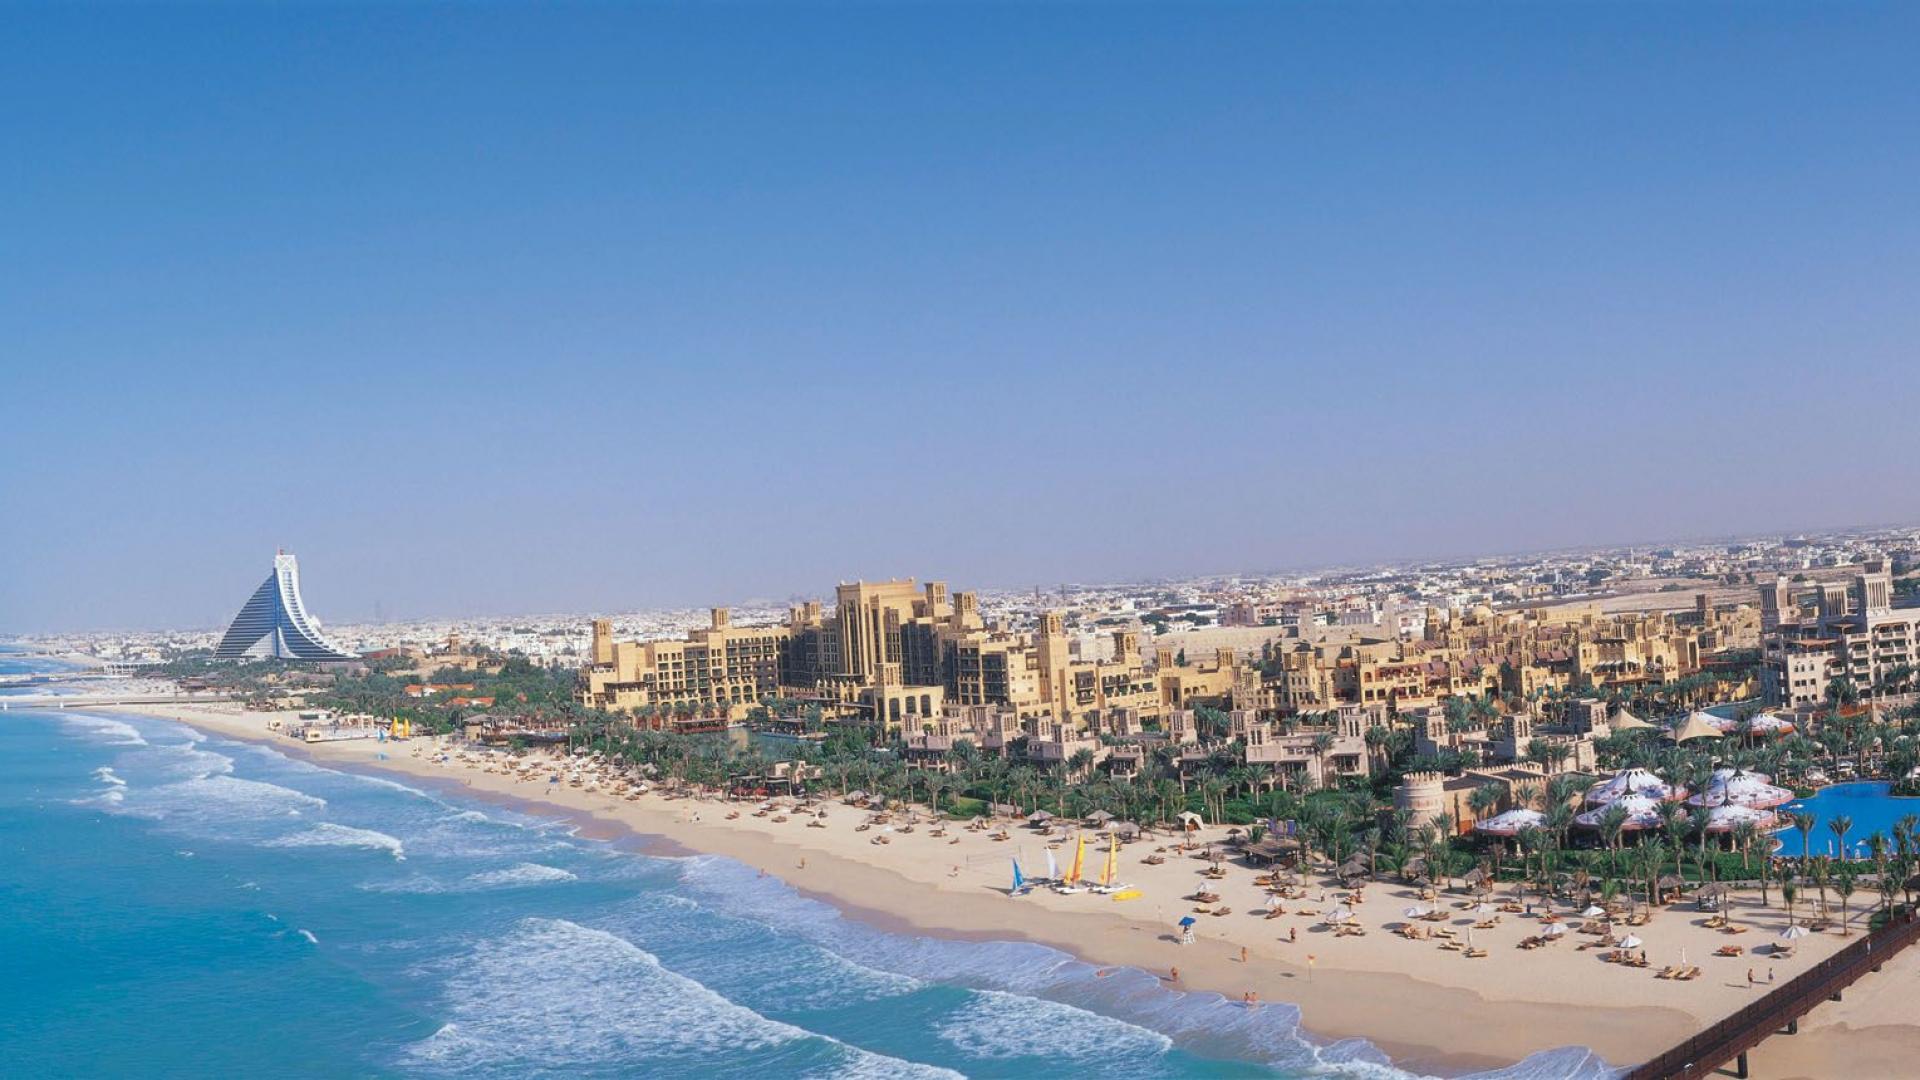 Dubai Beaches 12426 Hd Wallpapers in Travel n World   Imagescicom